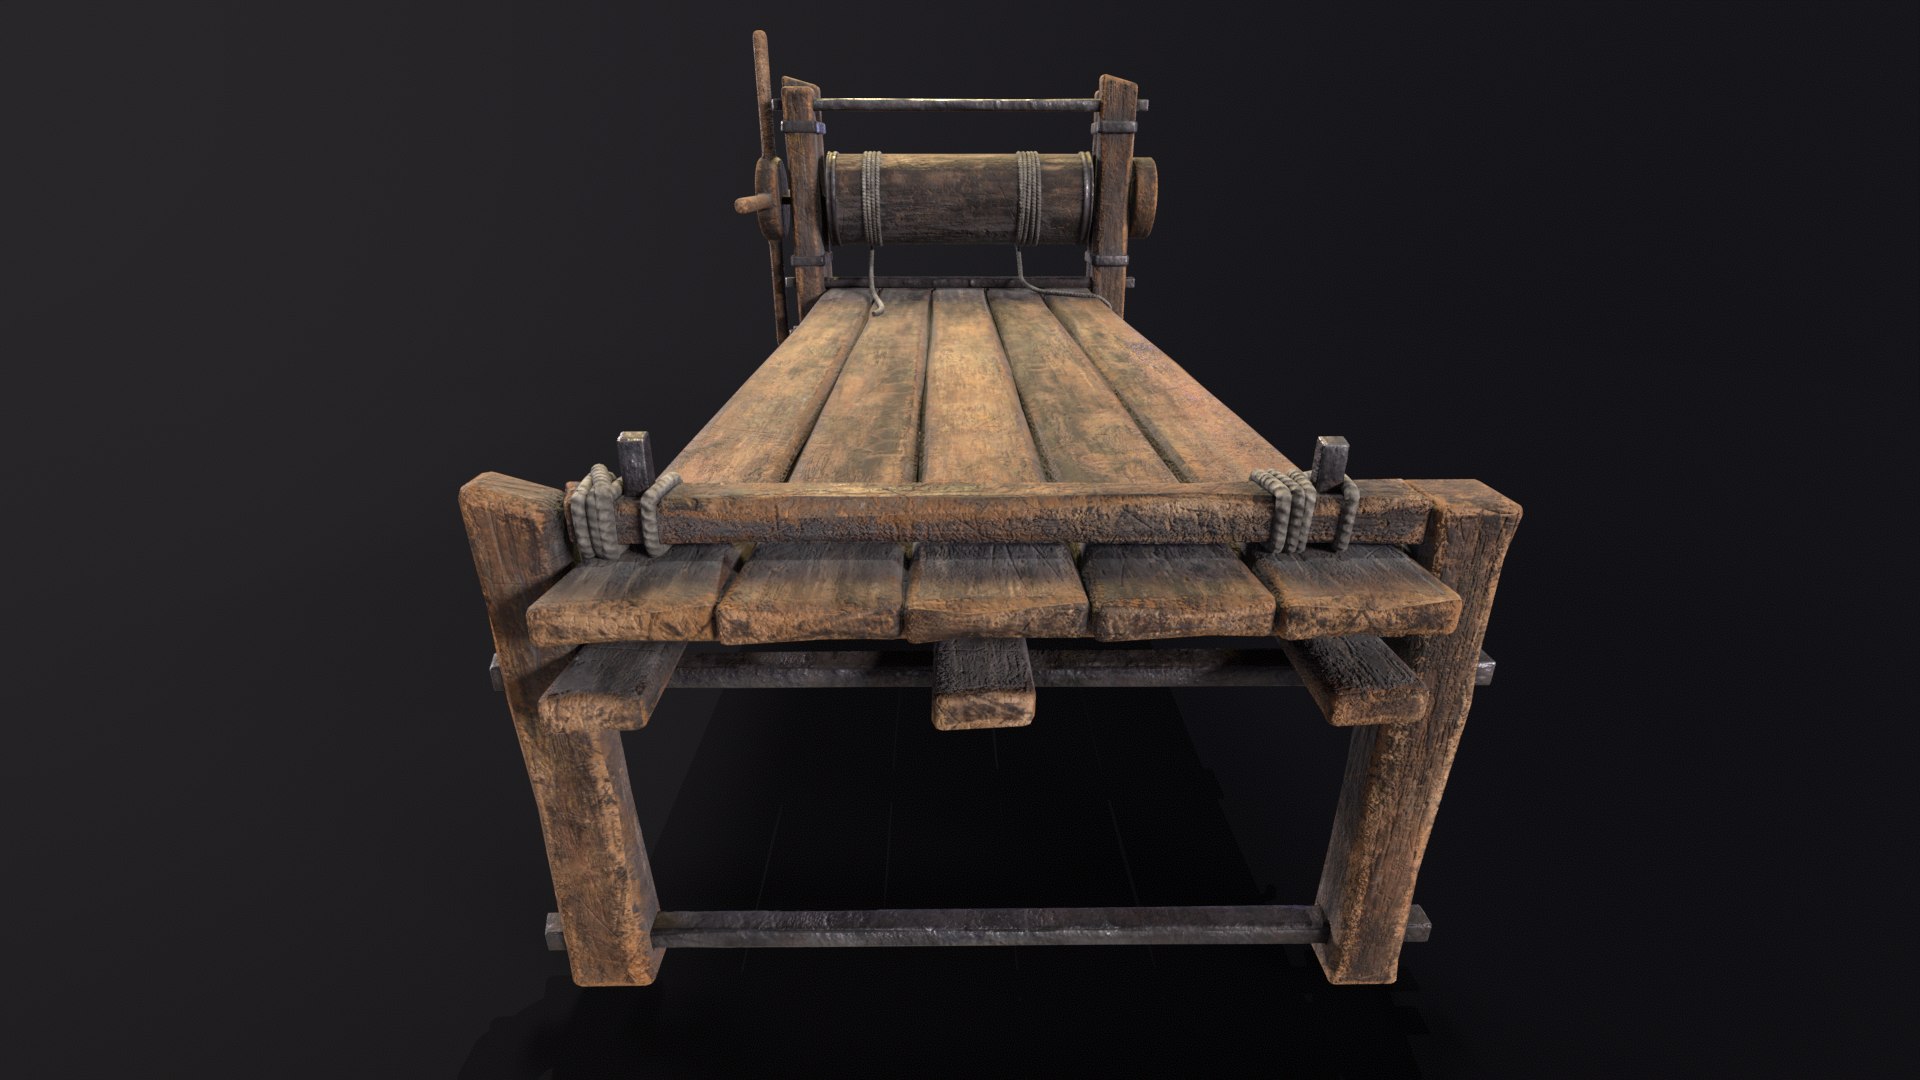 Medieval Rack Torture 3D Model - TurboSquid 2175258